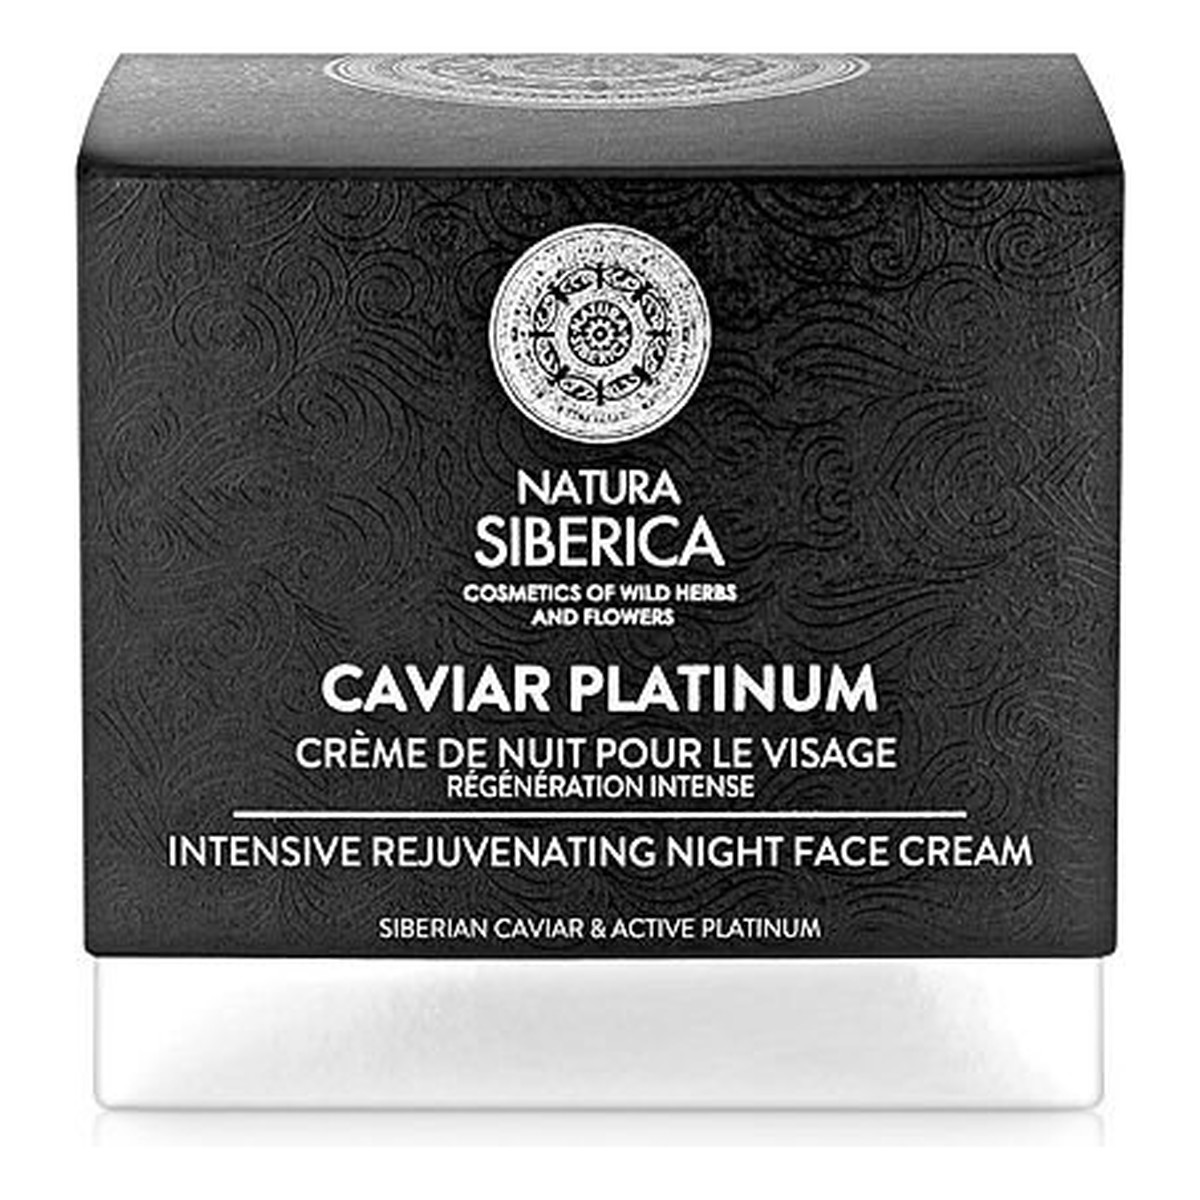 Natura Siberica Caviar Platinum Intensive Rejuvenating Night Face Cream Intensywnie odmładzający krem do twarzy na noc 50ml